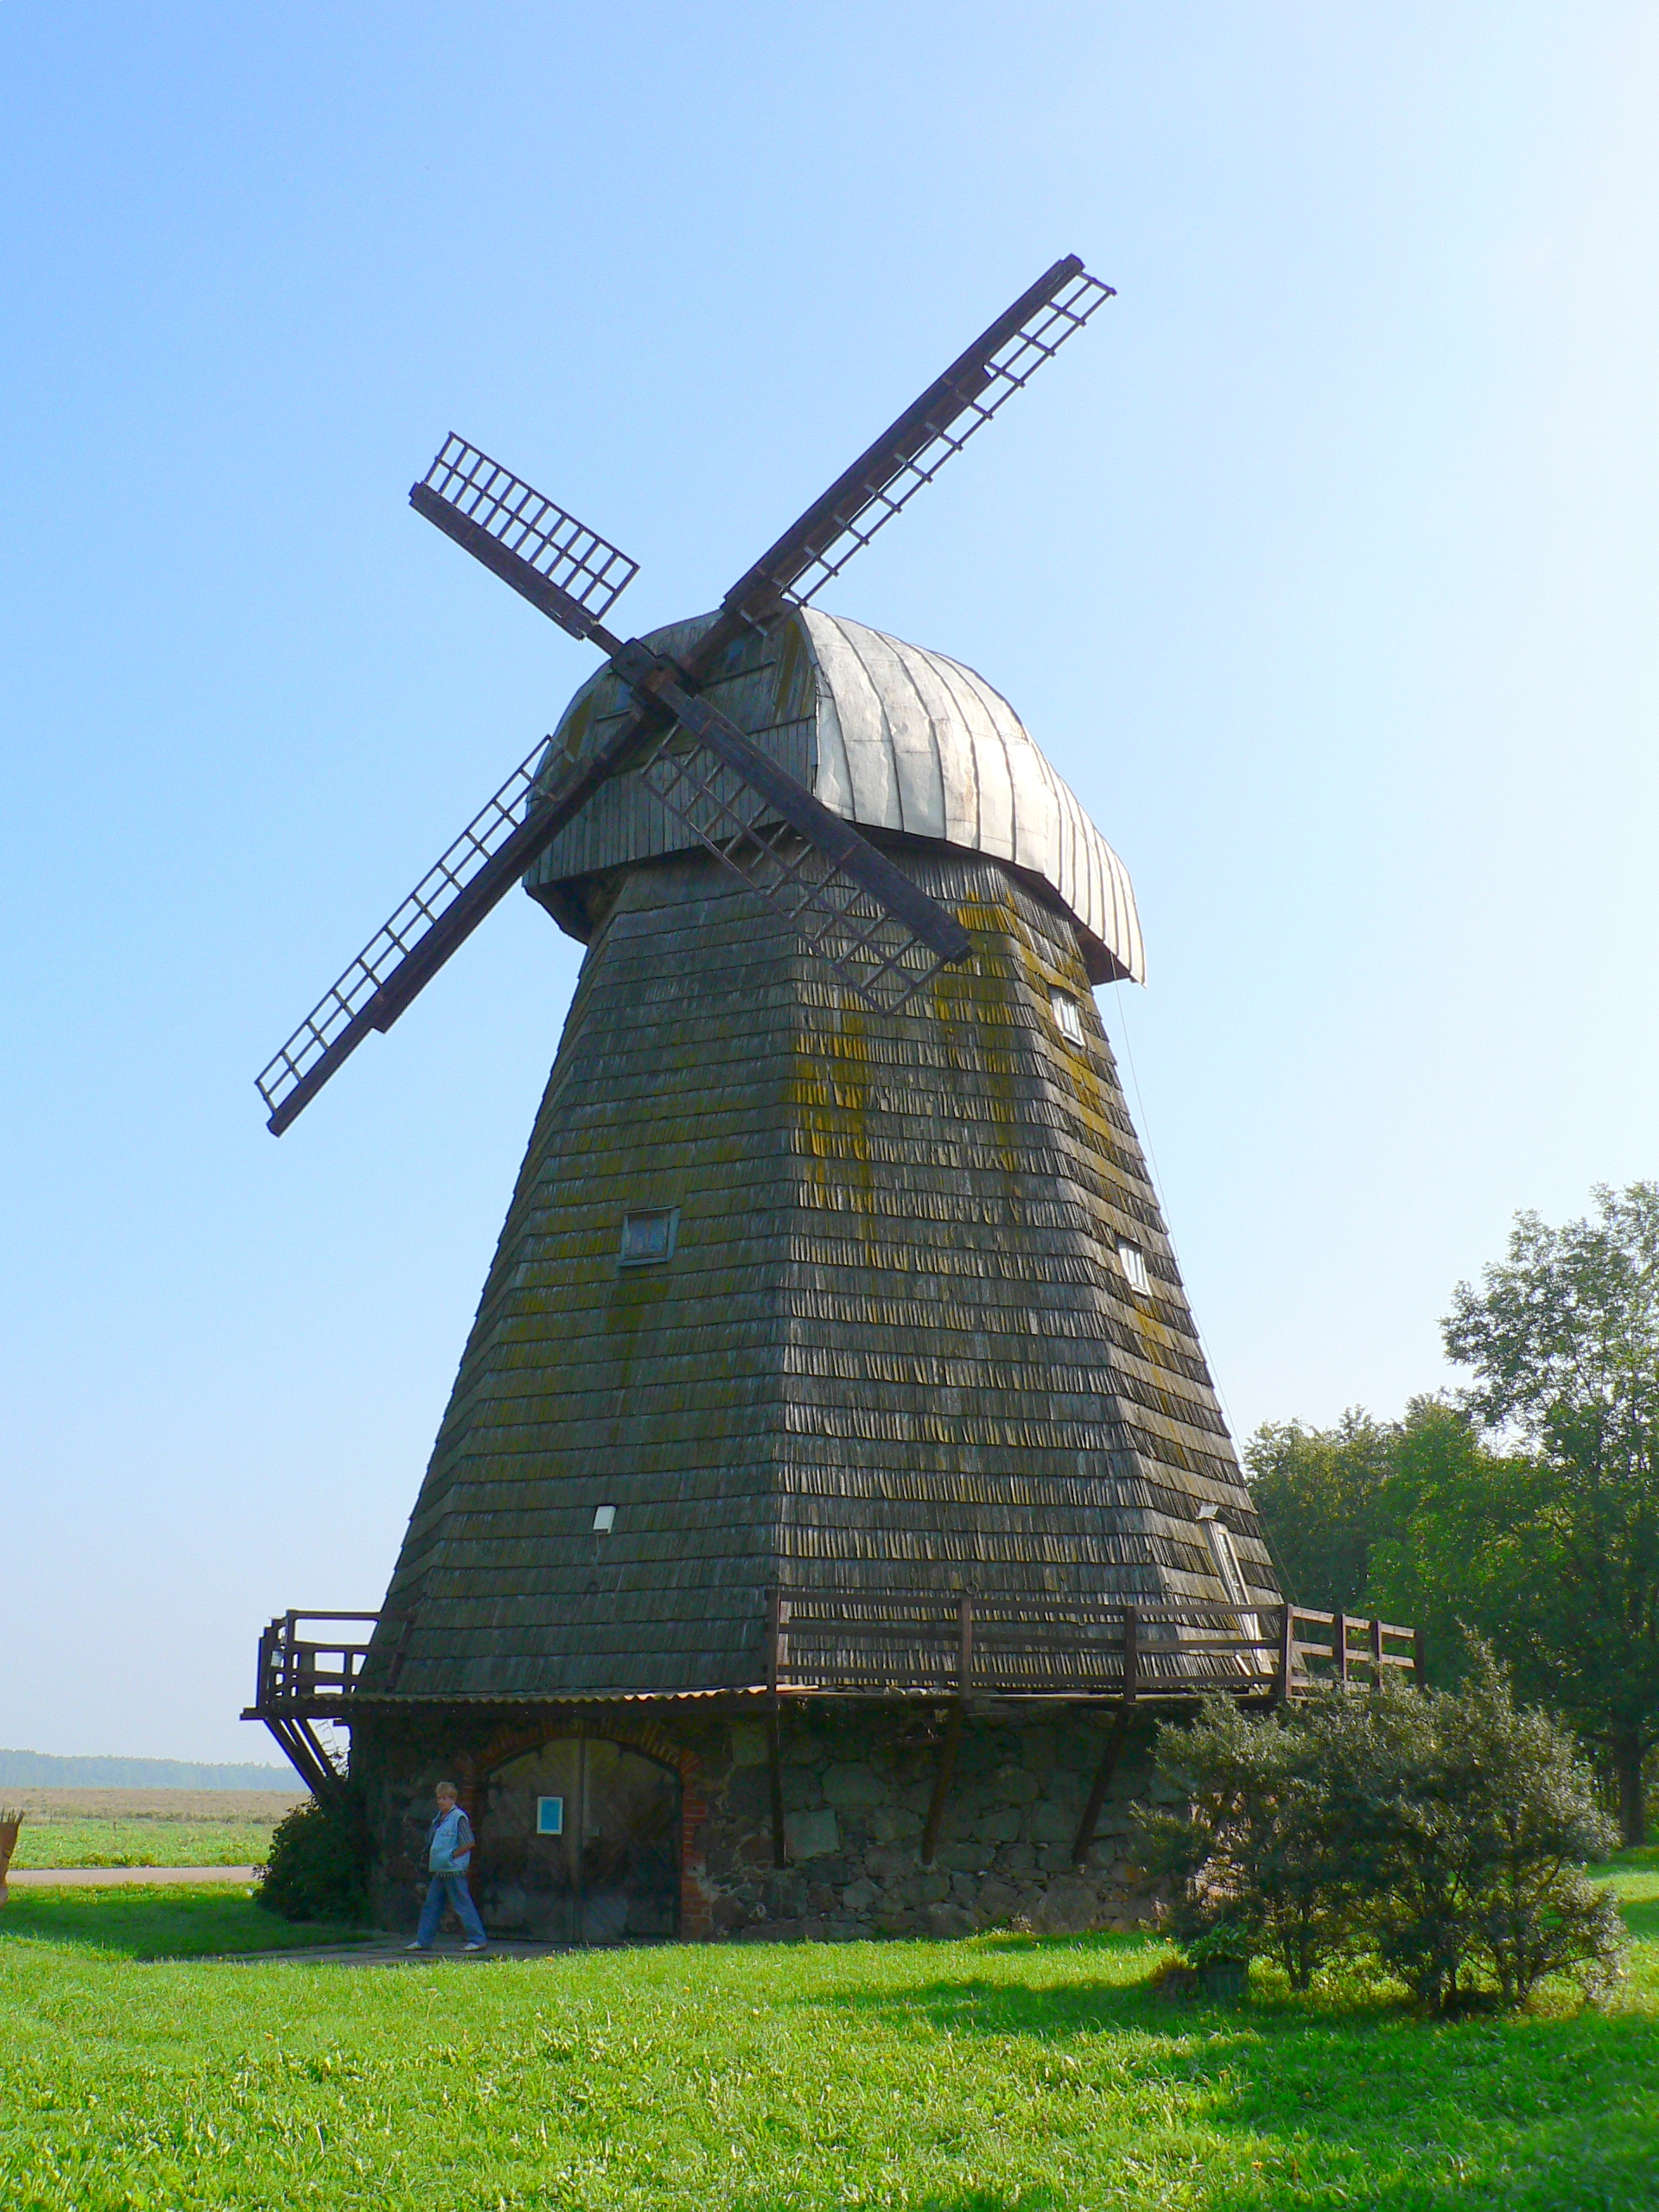 File:Lithuania Stultiskiai wooden mill.jpg - Wikimedia Commons